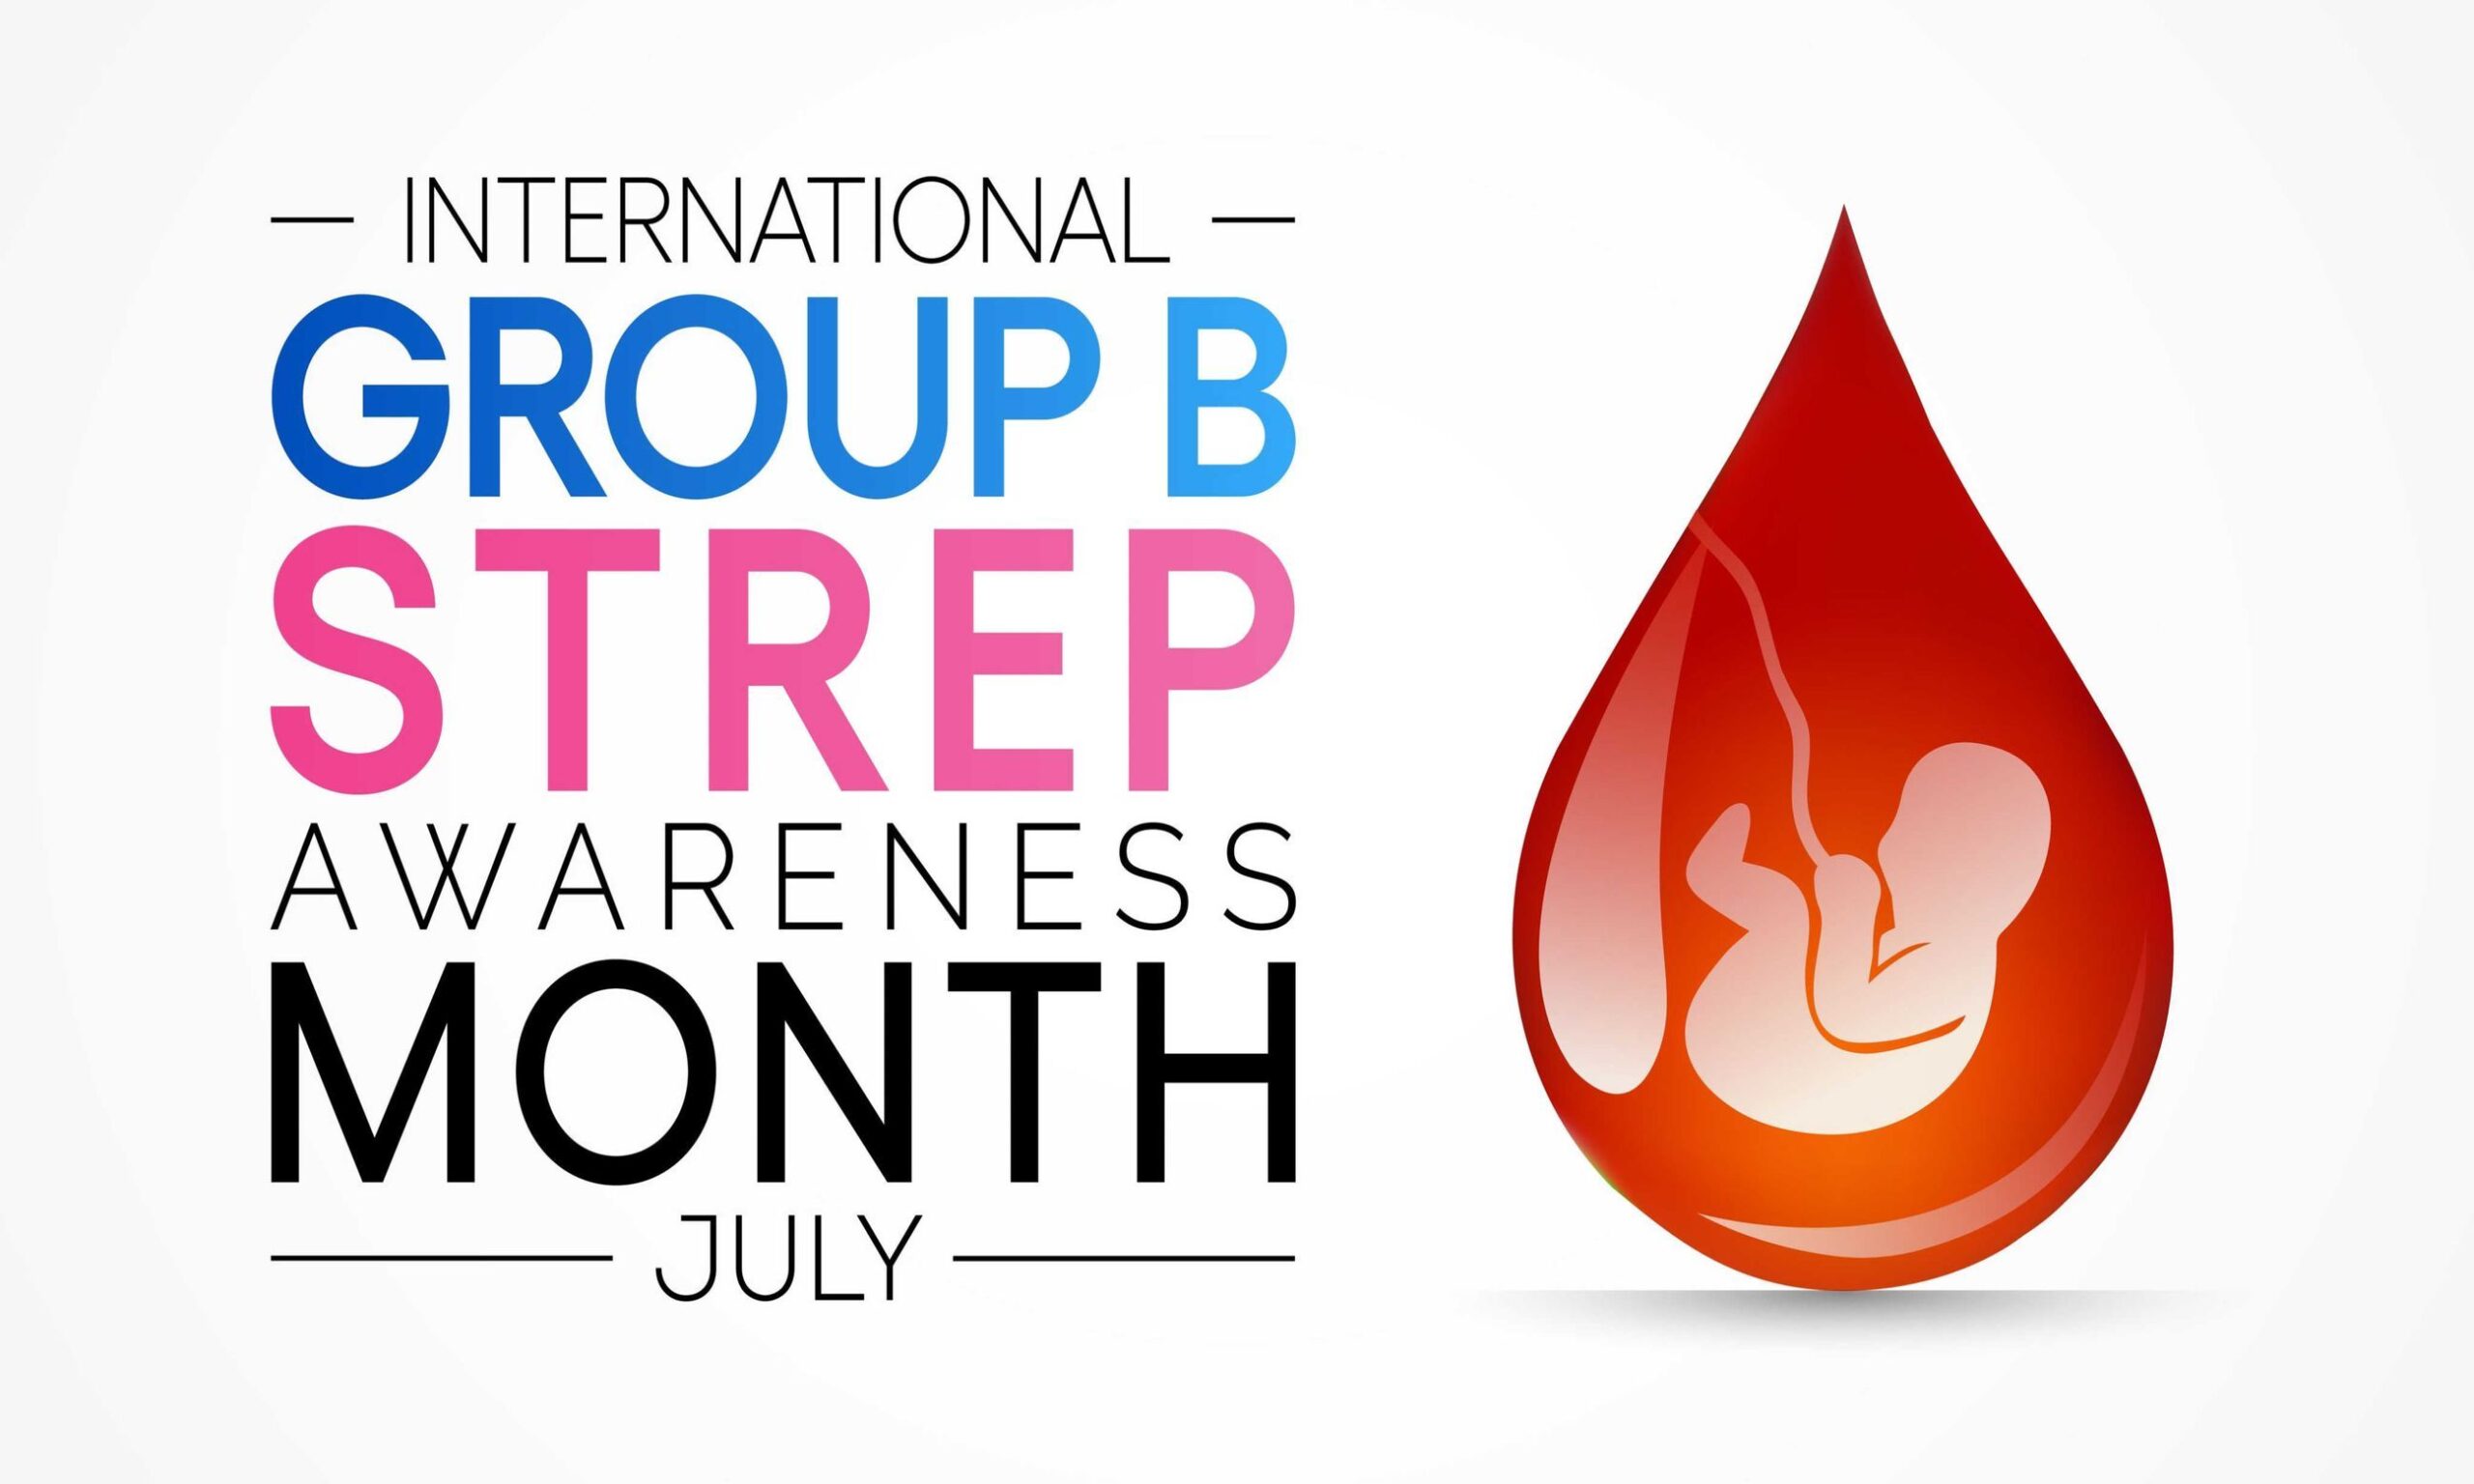 International Group B Strep Awareness Month - July